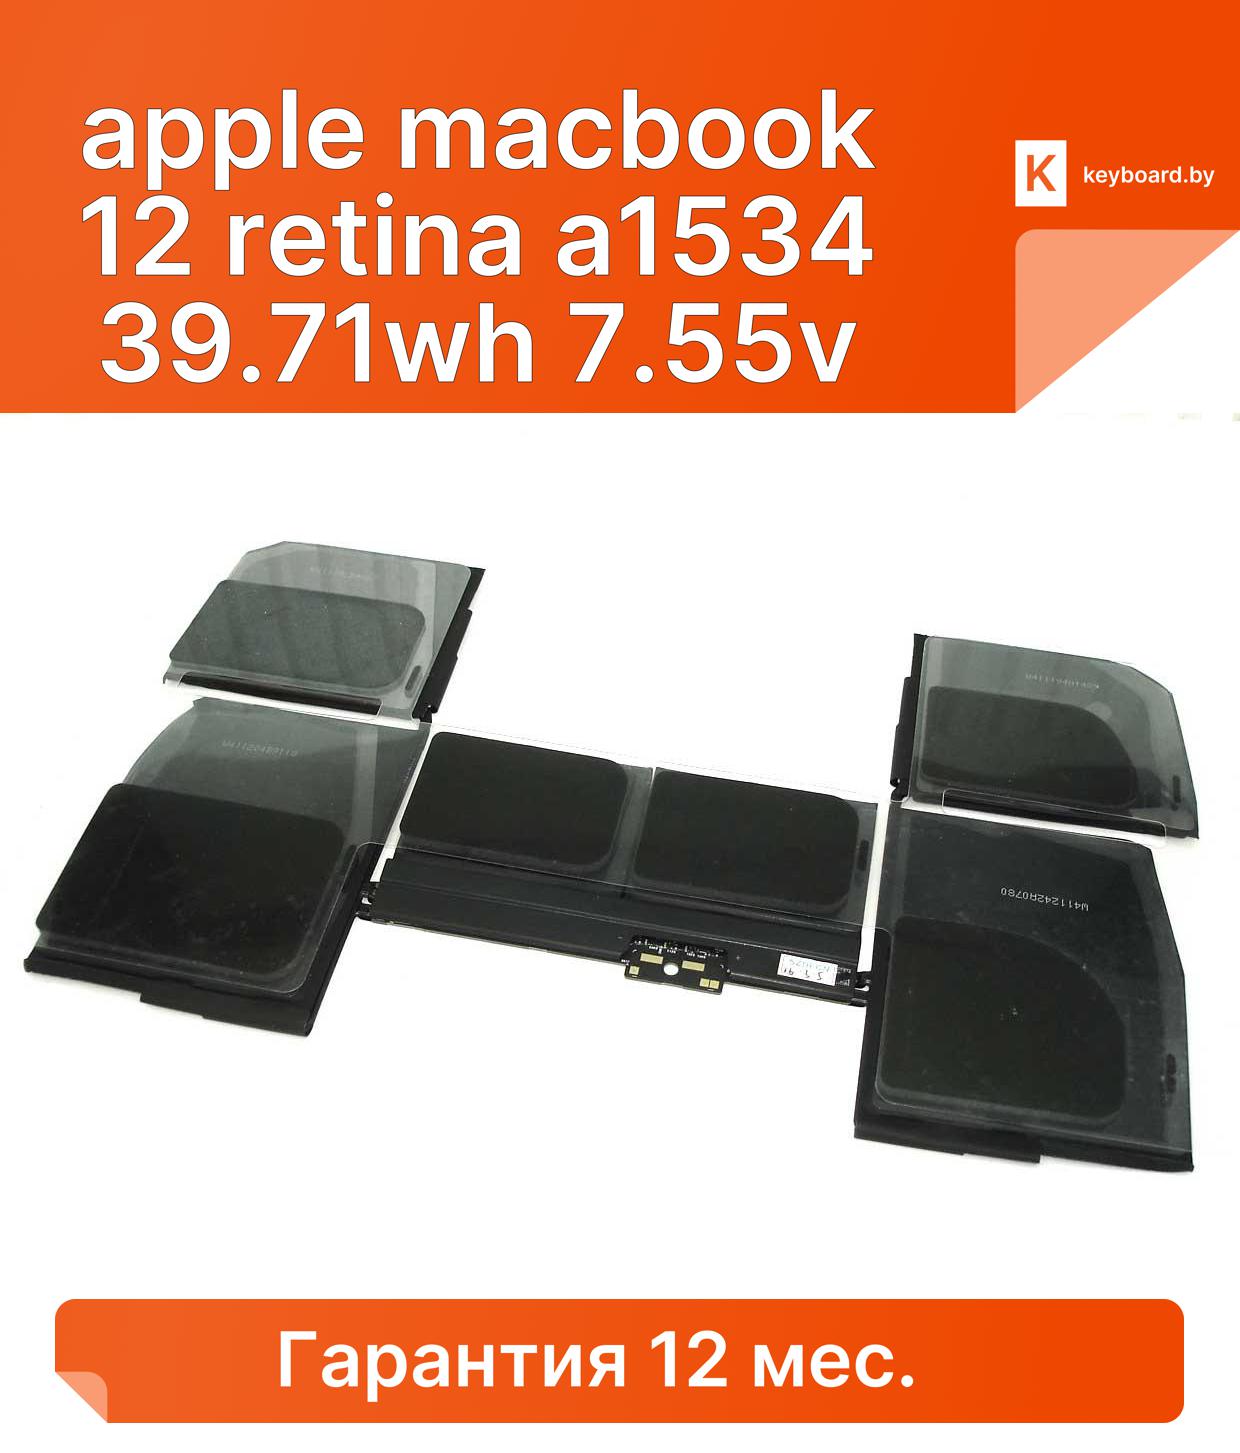 Аккумуляторная батарея для ноутбука apple macbook 12 retina a1534 39.71wh 7.55v